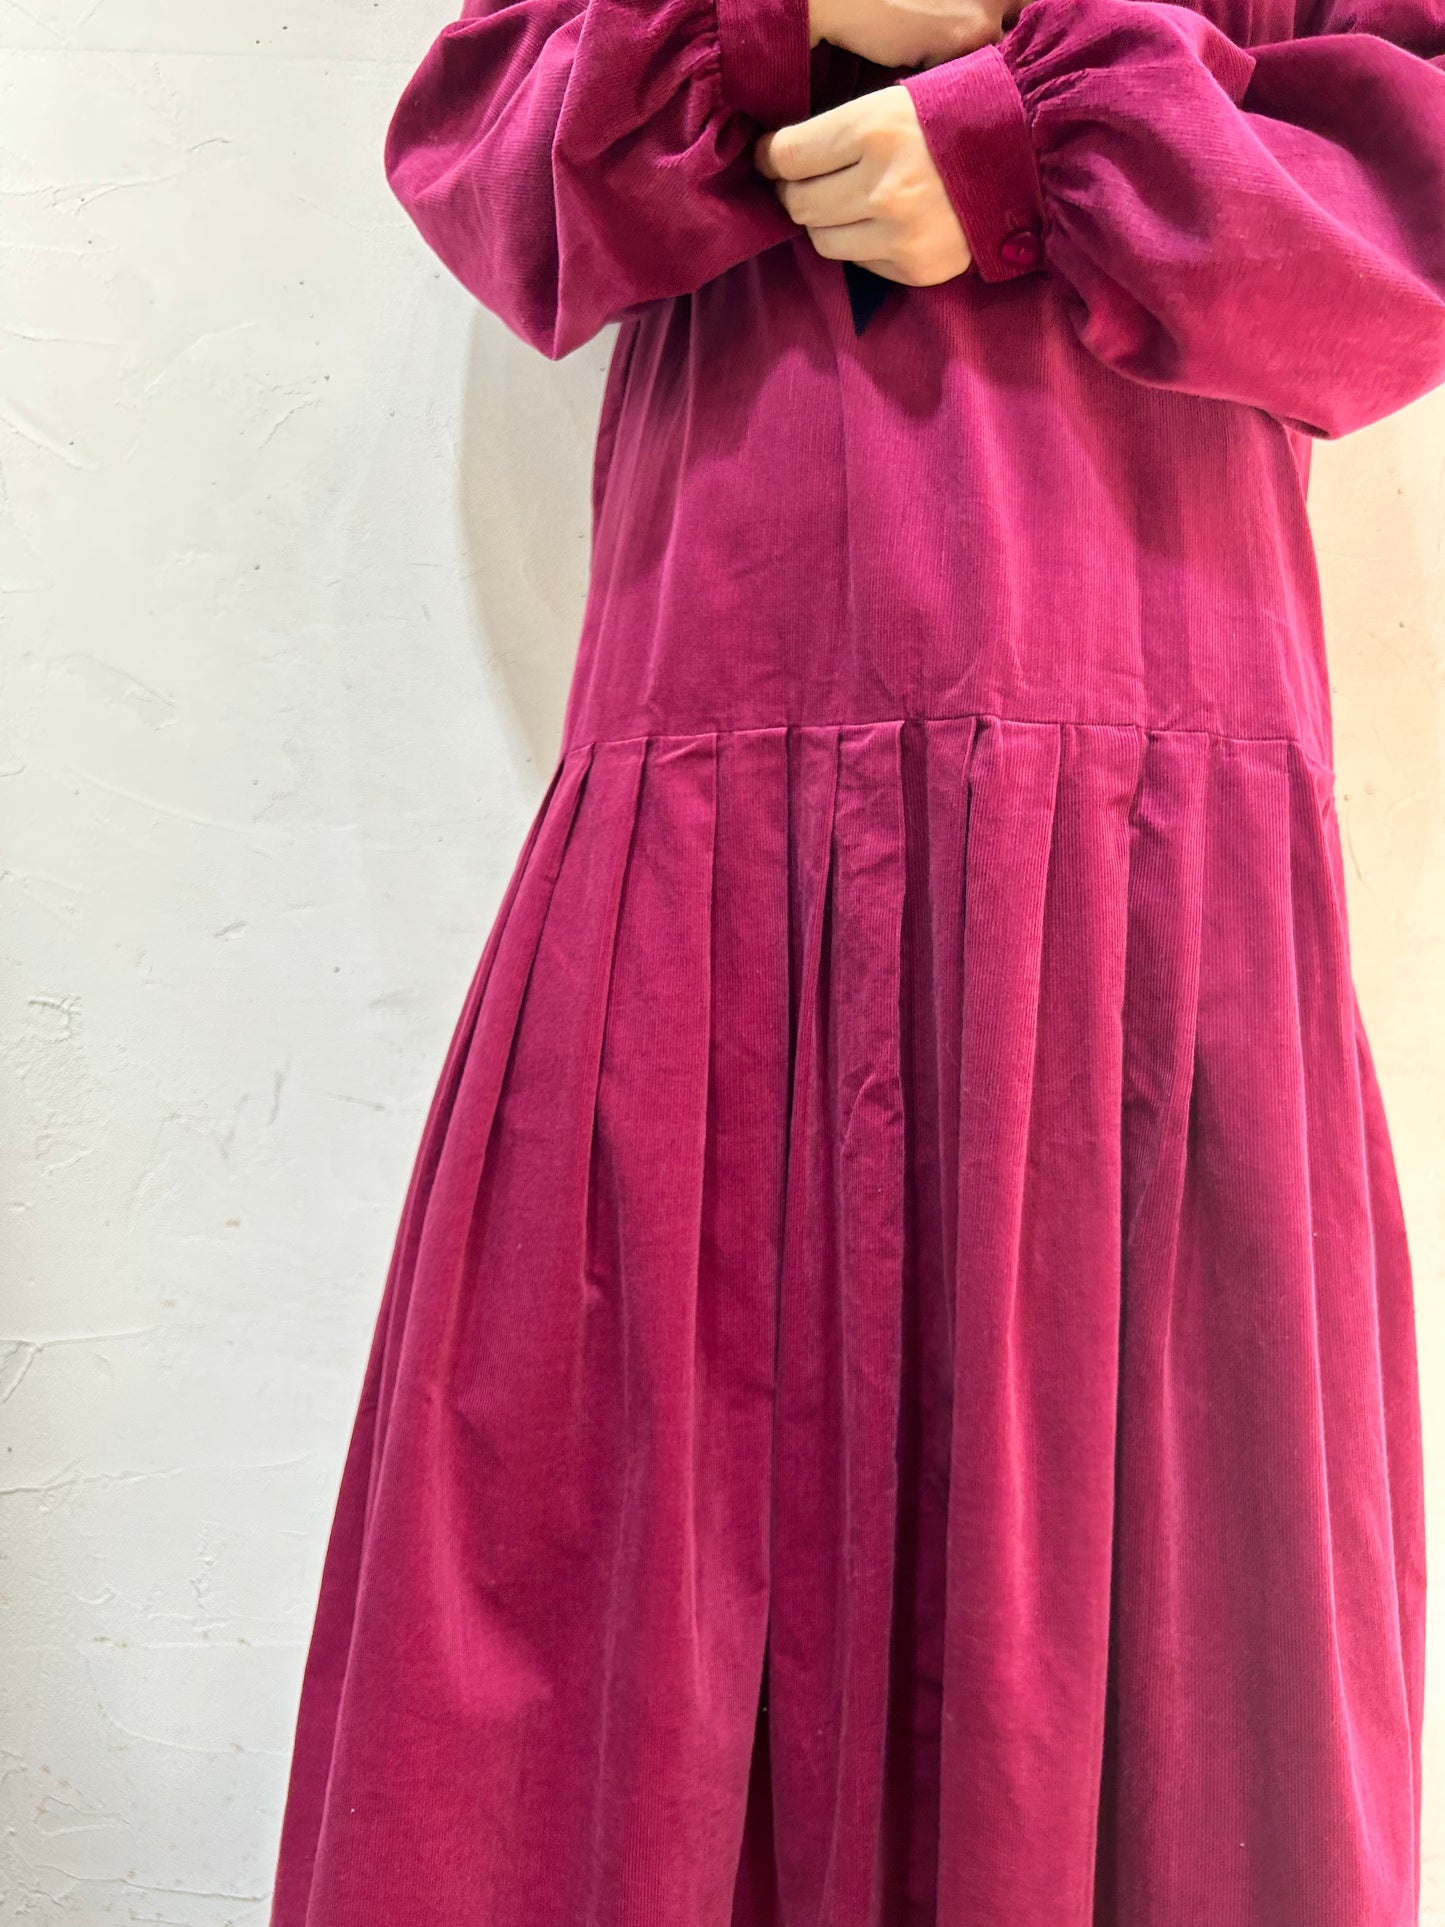 Vintage Corduroy Dress 〜Laura Ashley〜 [I25002]